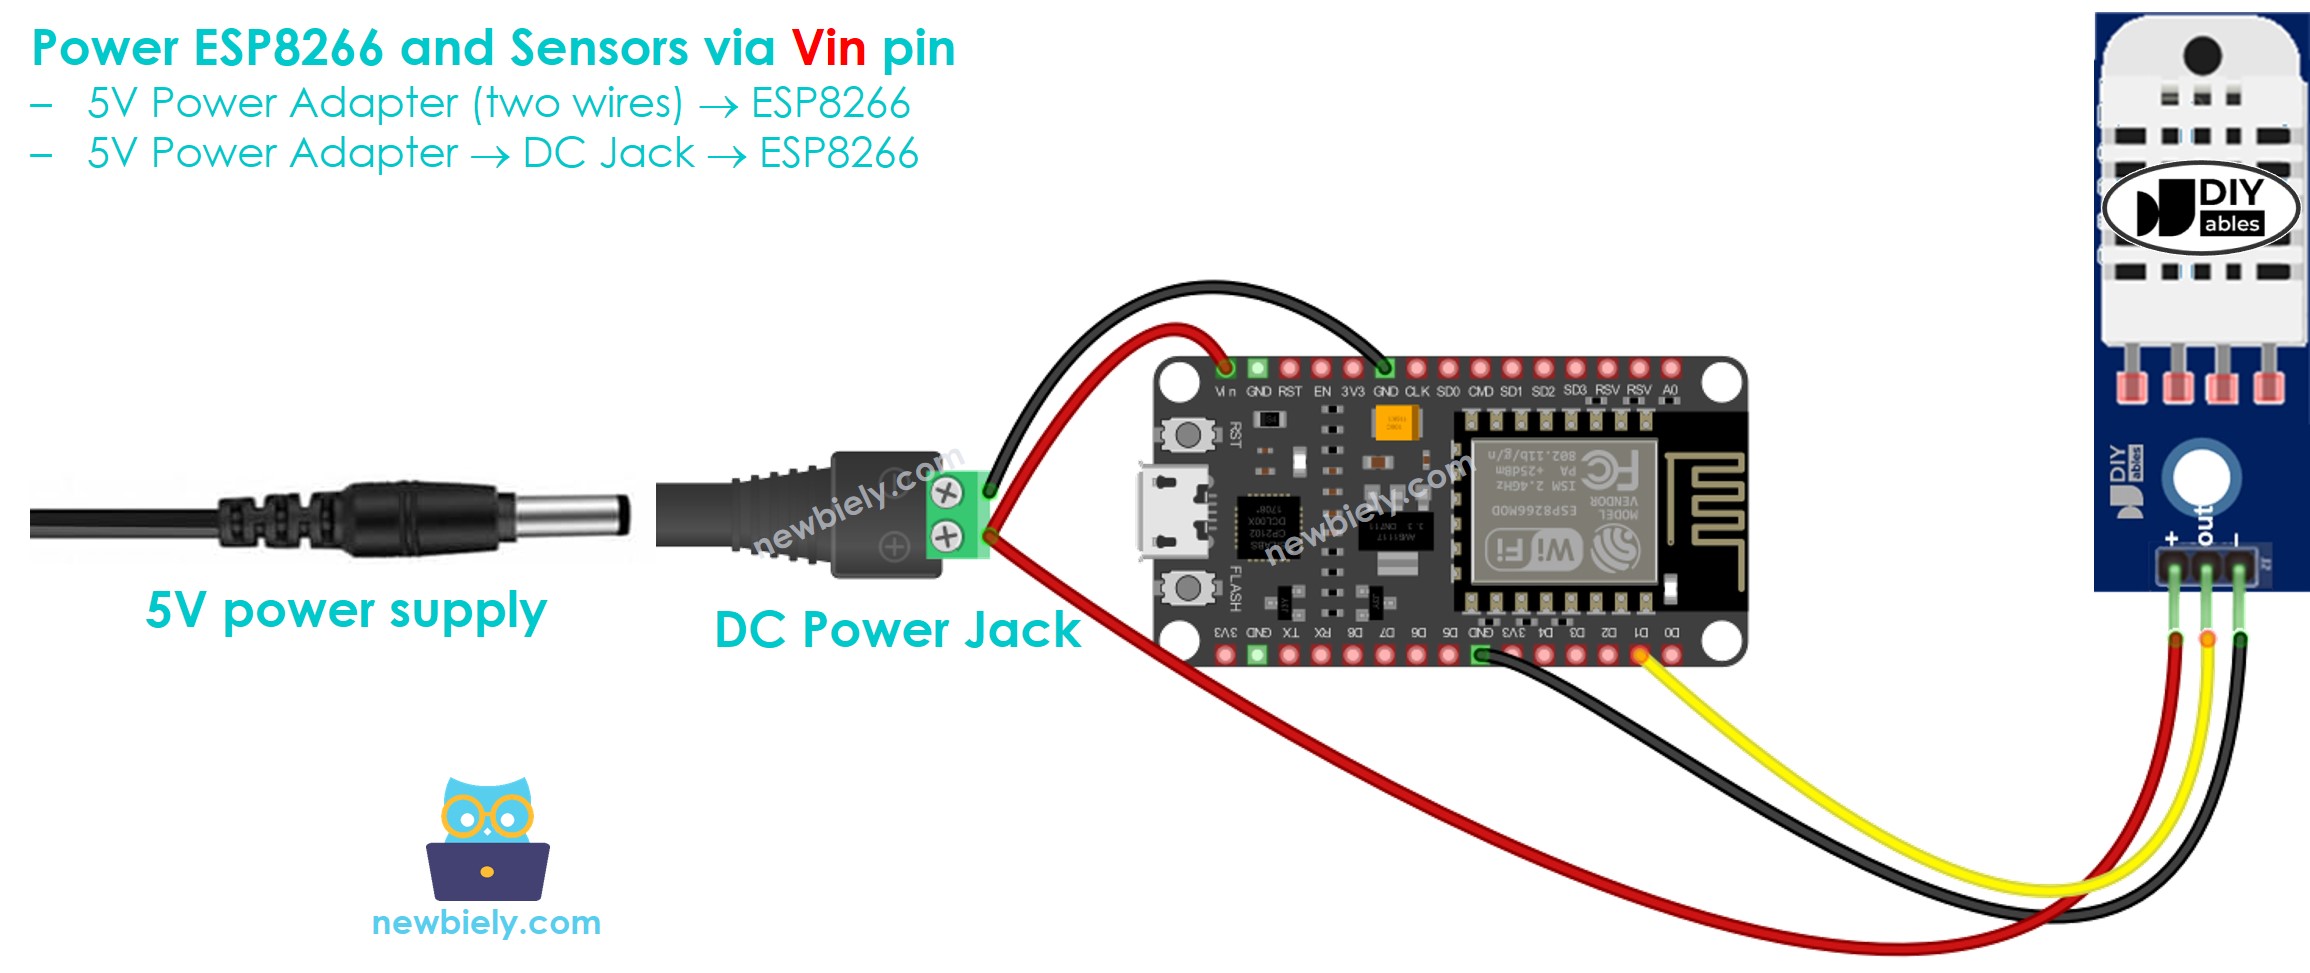 how to power ESP8266 NodeMCU and sensors via Vin pin